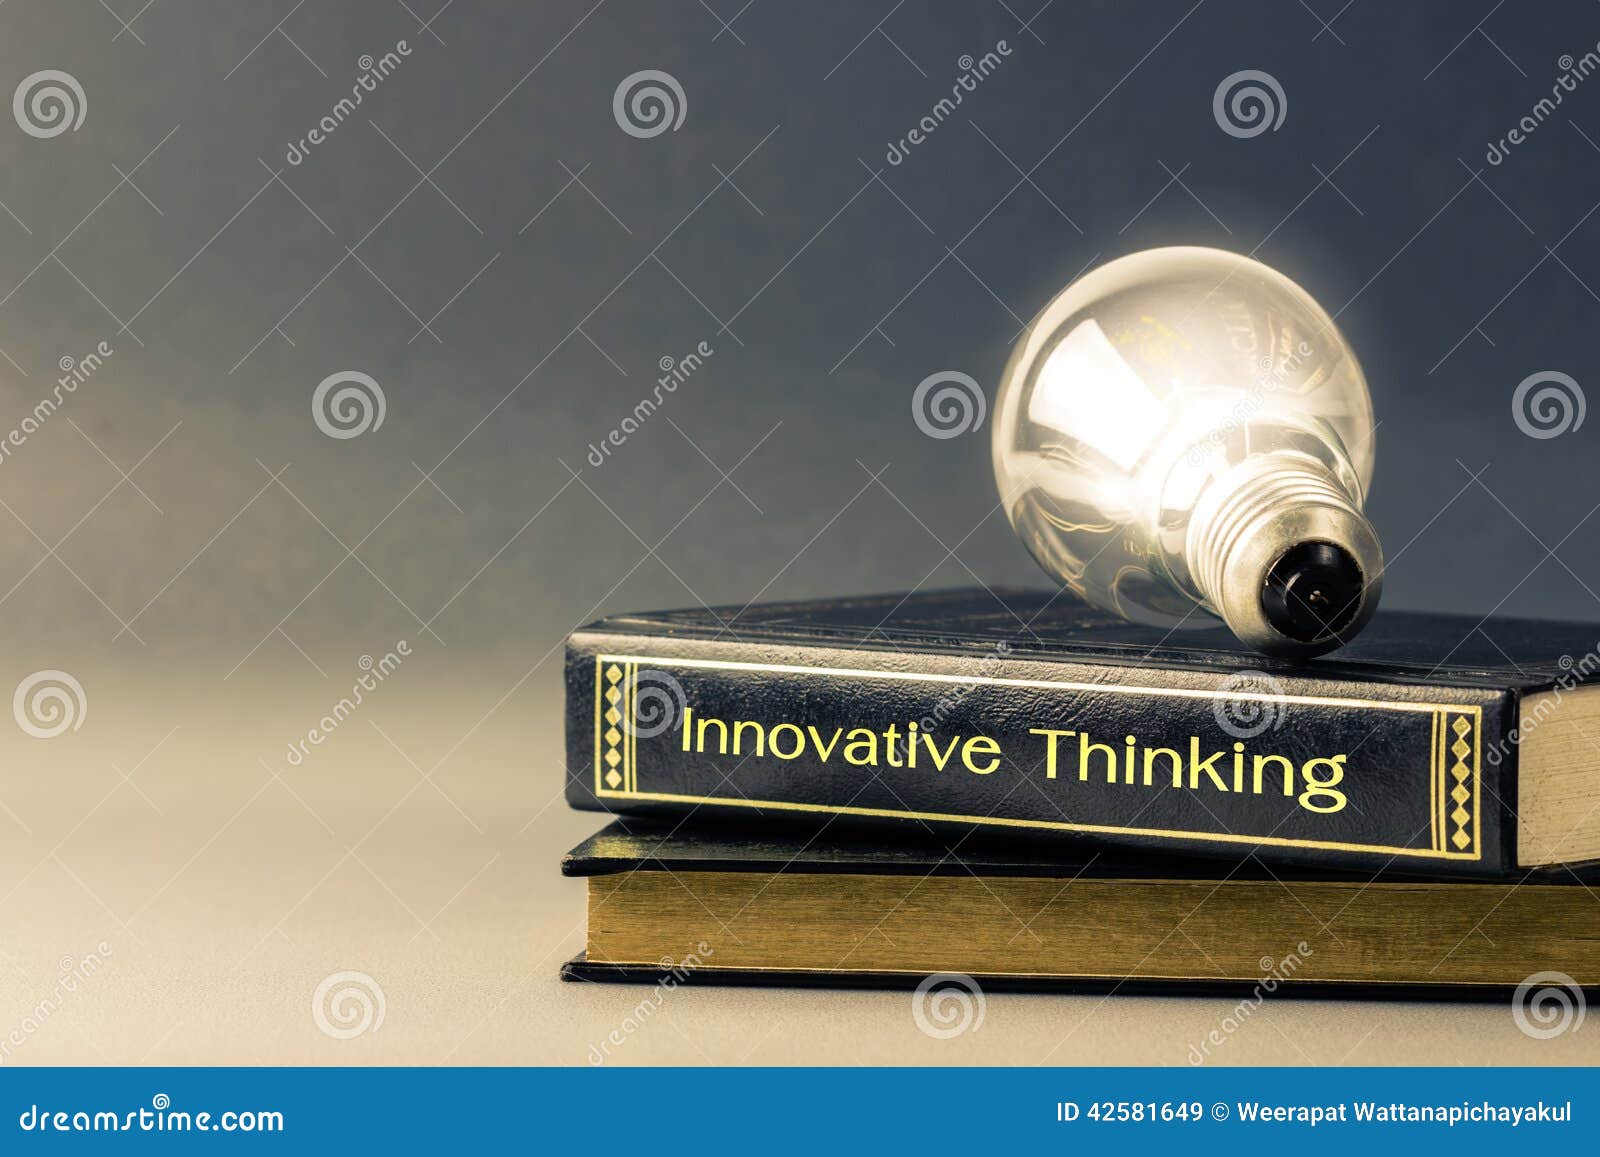 innovative thinking